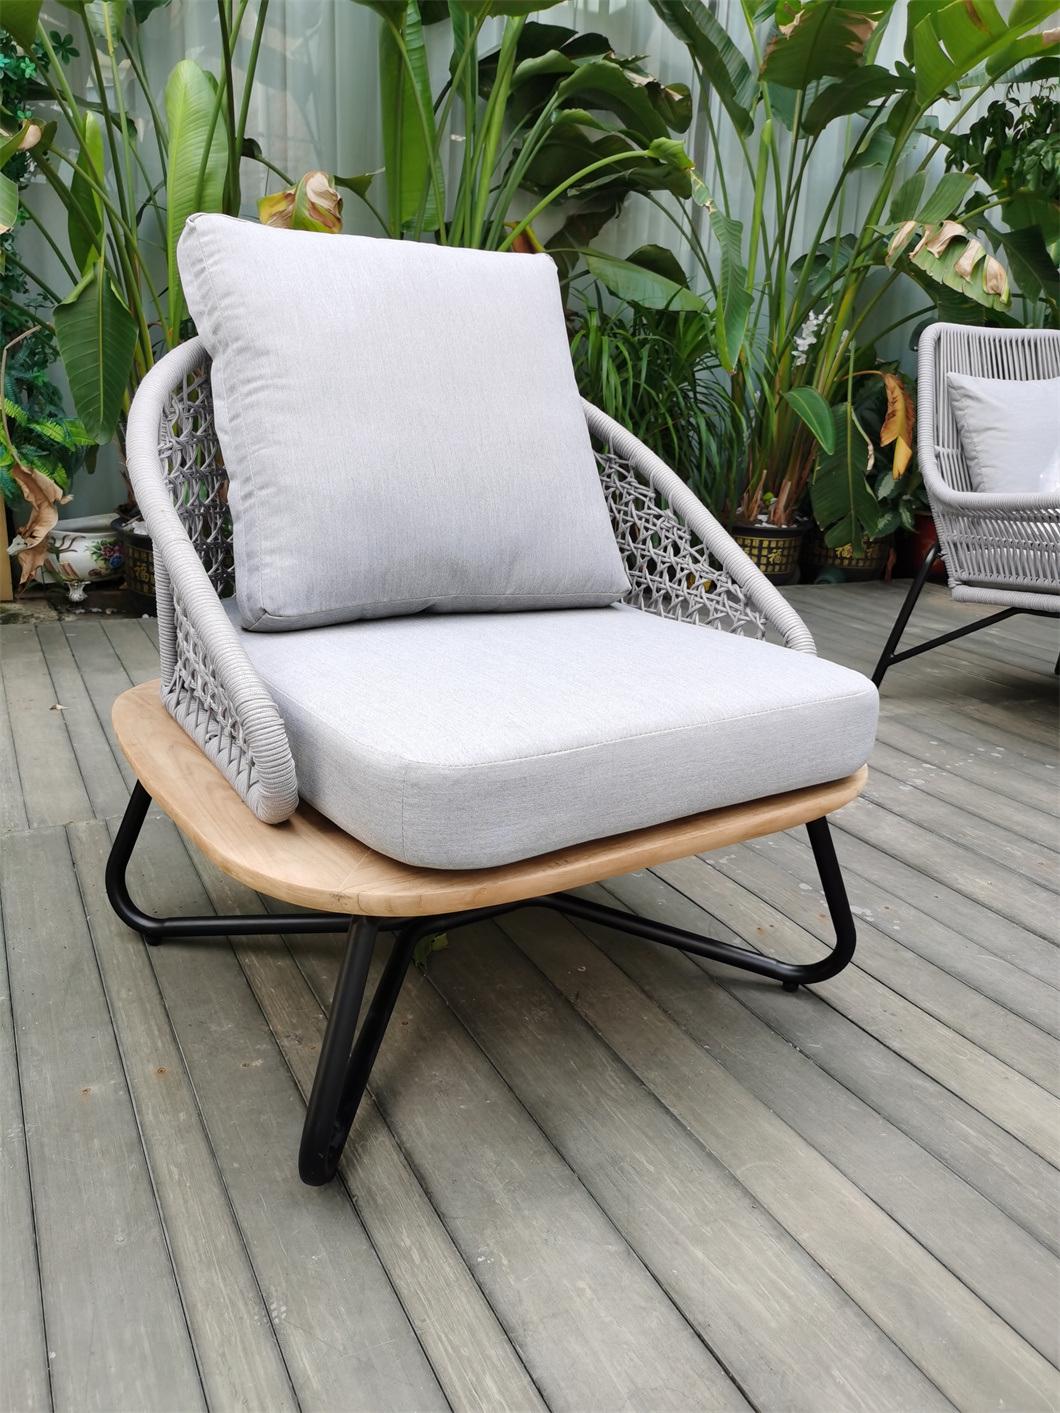 Modern Style Wooden Outdoor Garden Patio Outdoor Rattan Furniture Chair